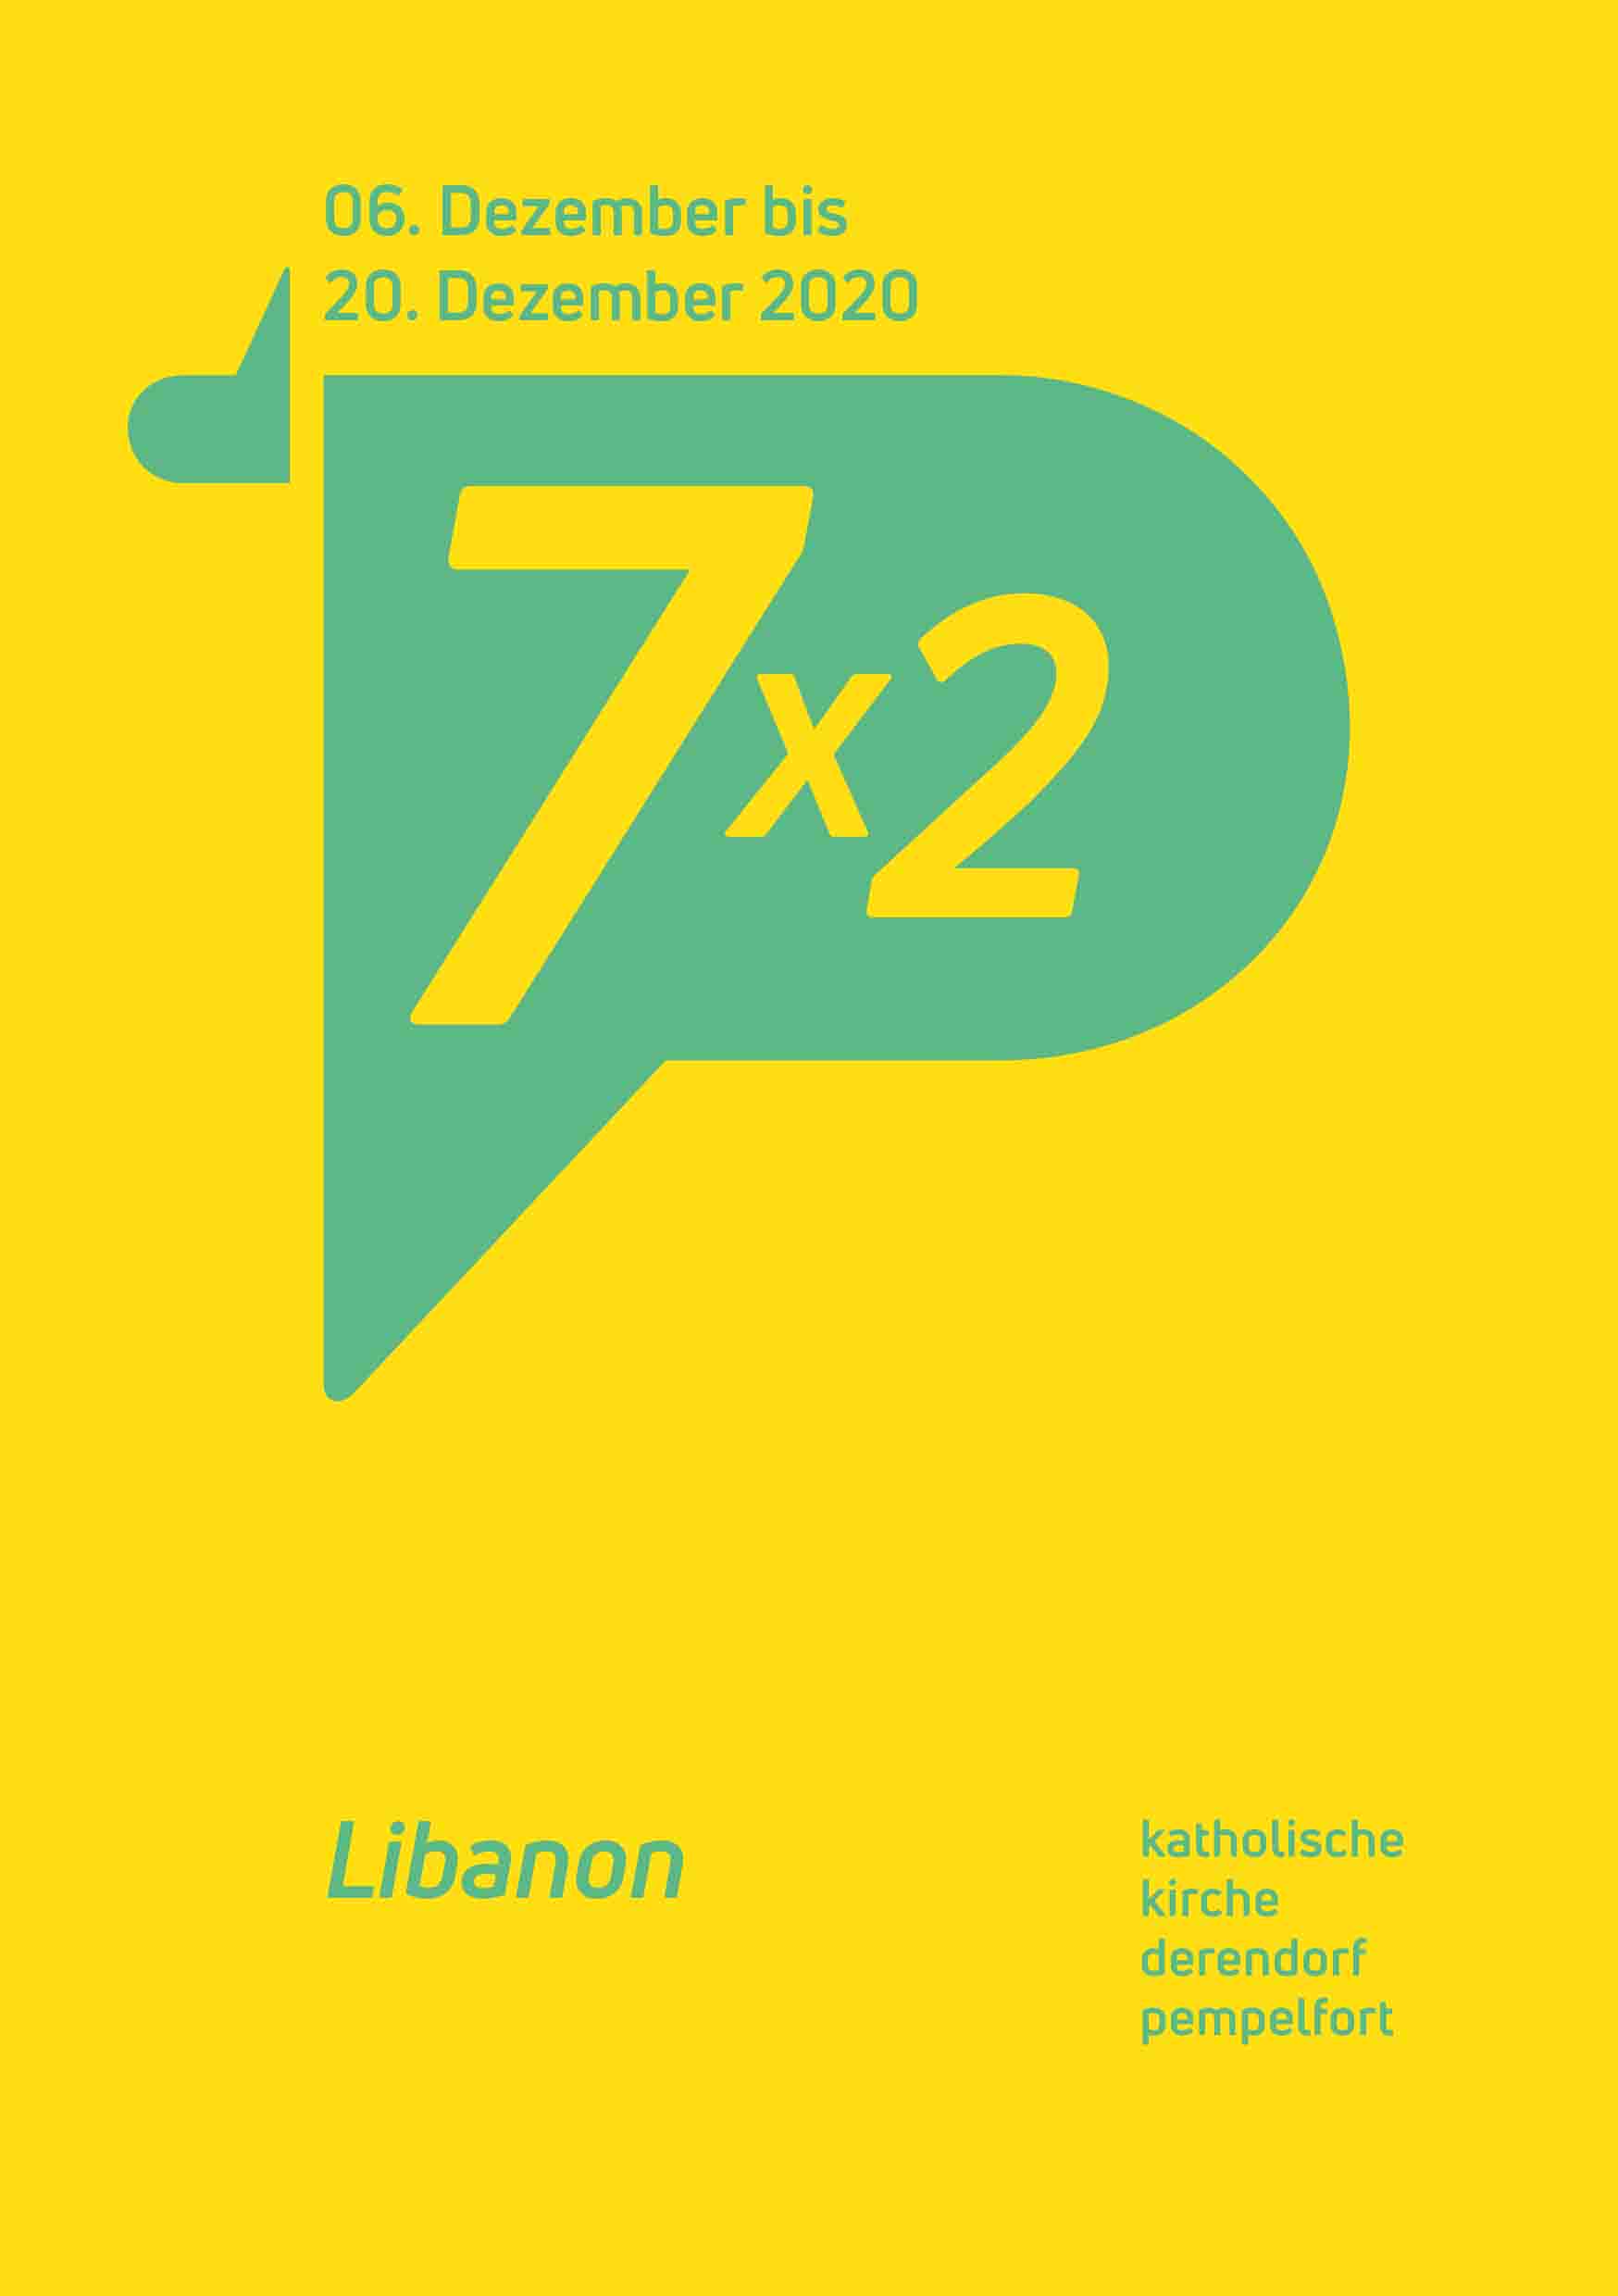 Titel 7x2 Libanon